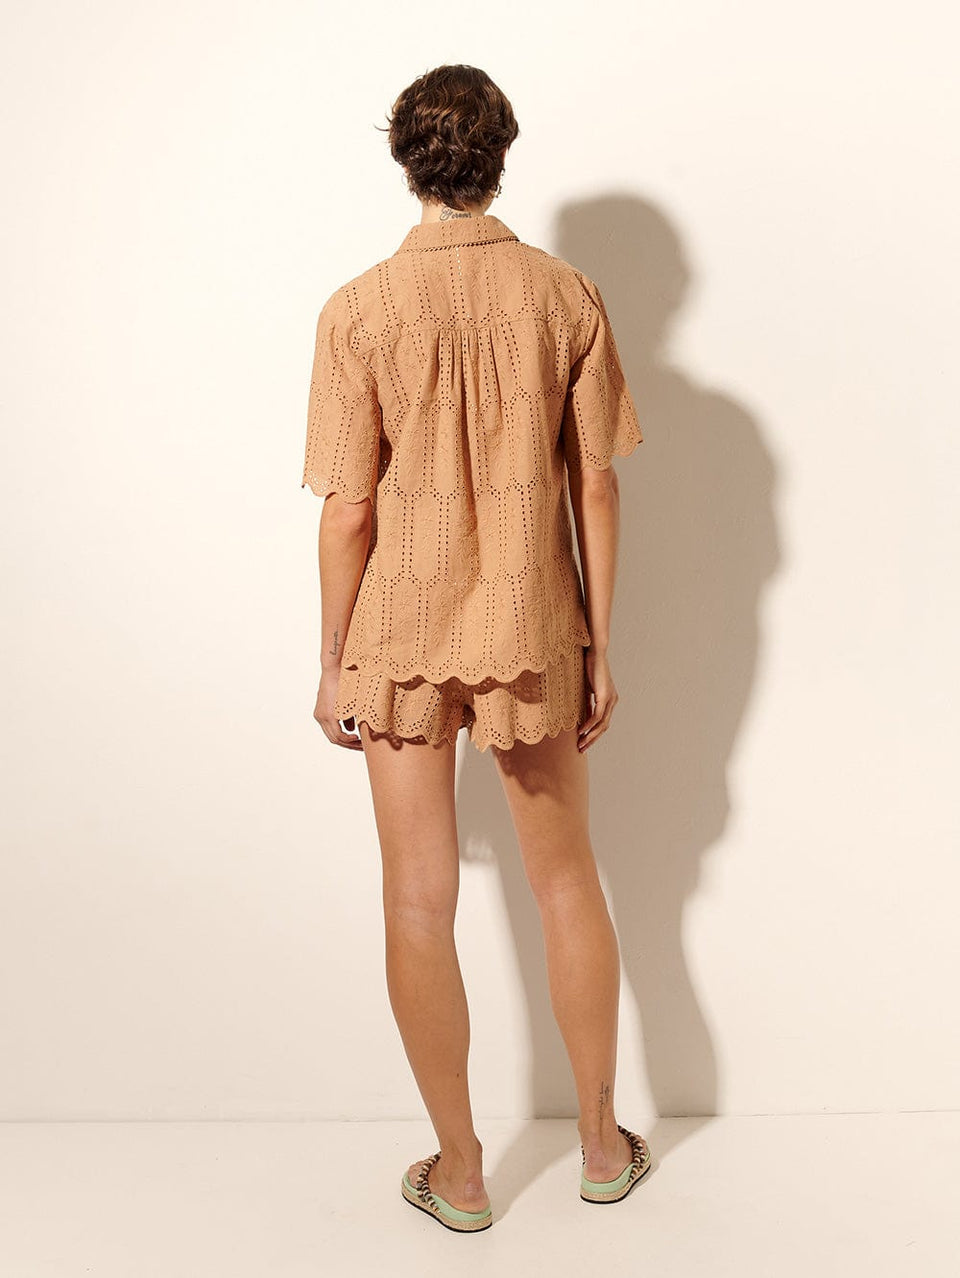 Estelle Shirt Mocha KIVARI | Model wears brown shirt with lace detail back view